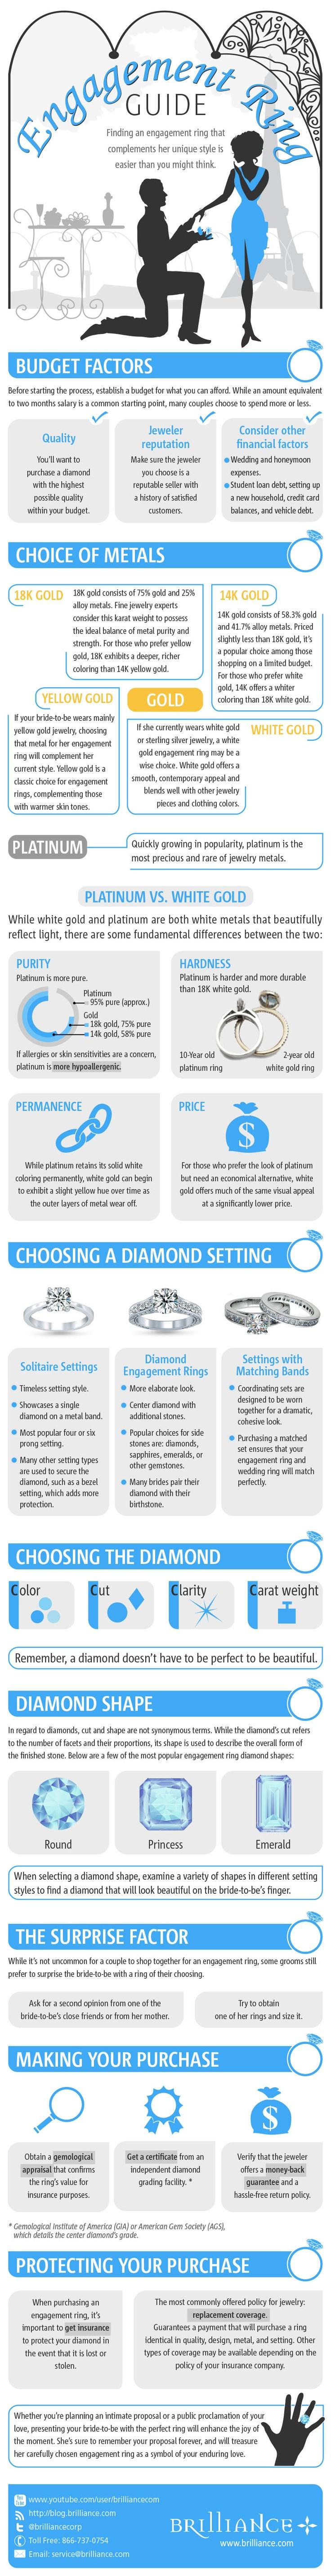 زفاف - Wedding Tips - Wedding Resource Ideas I Wedding Trends I Wedding Advice